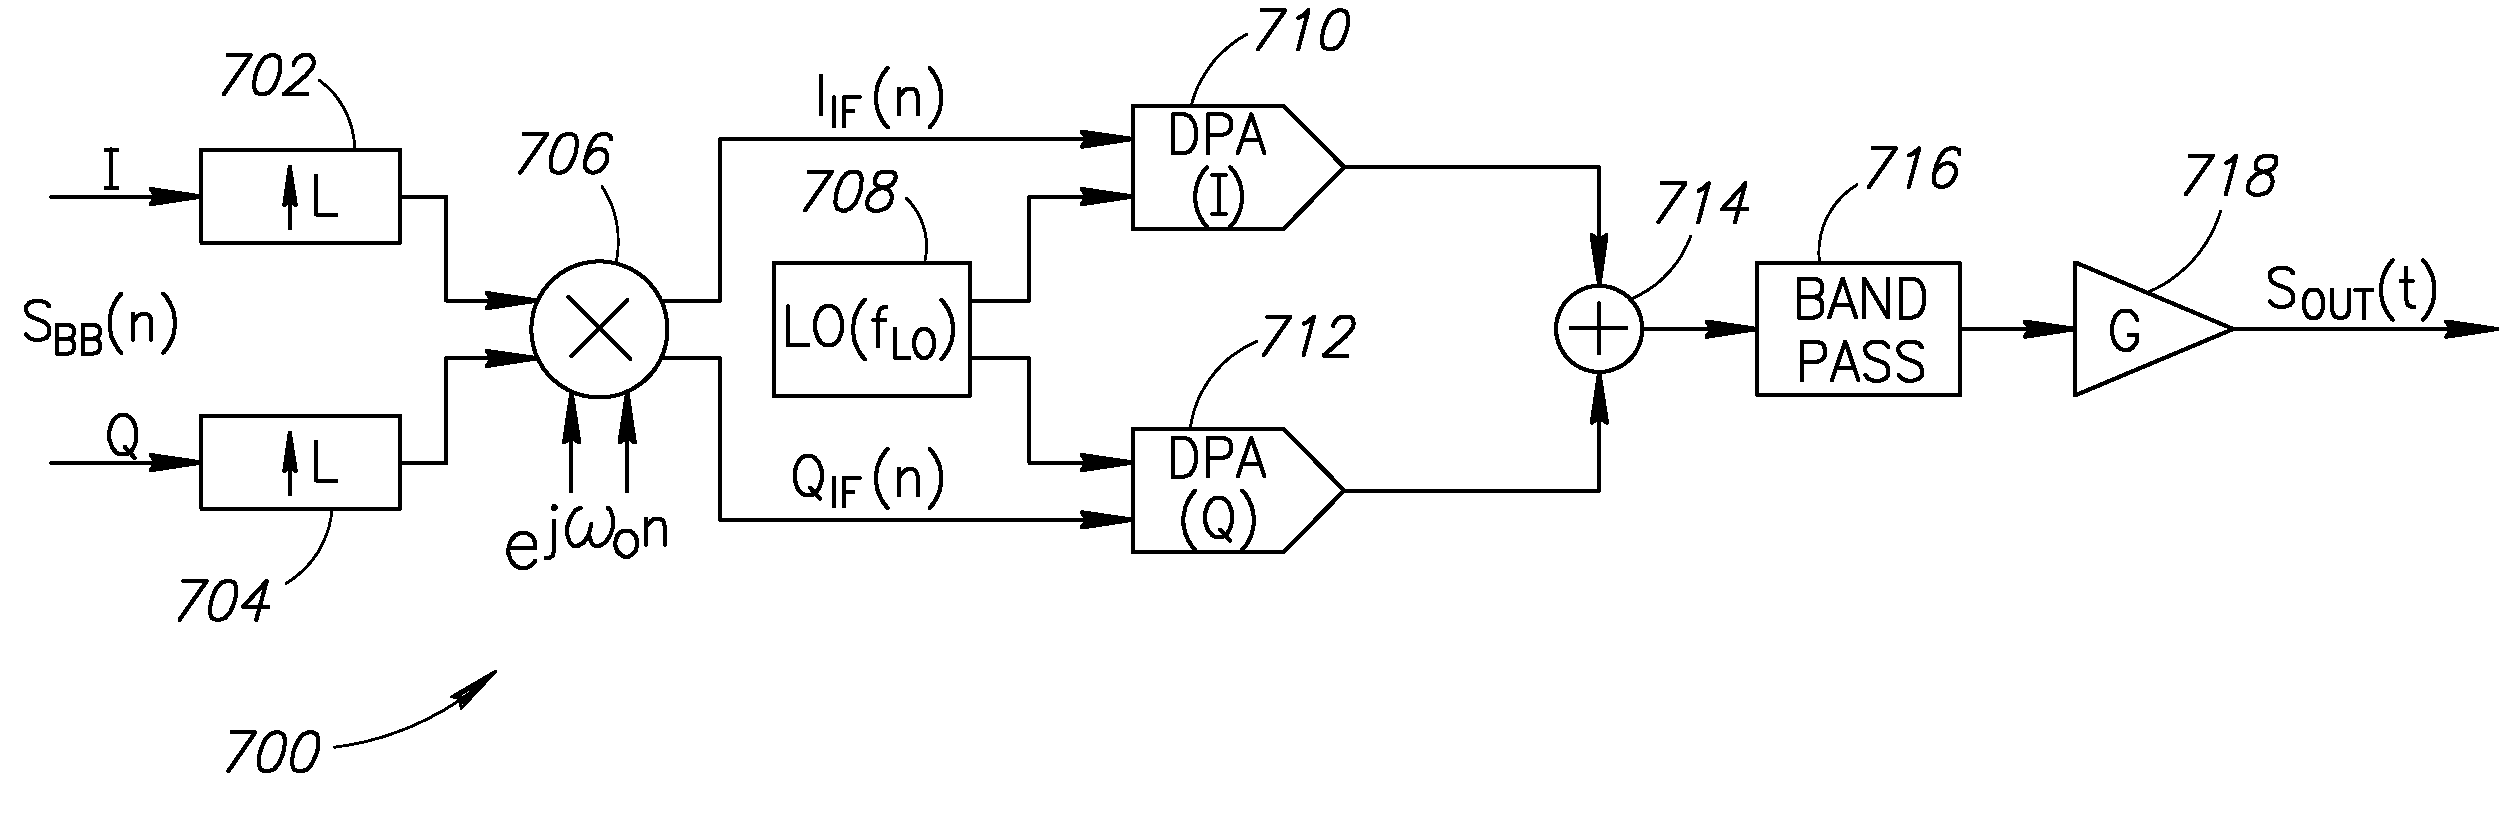 Local oscillator with non-harmonic ratio between oscillator and RF frequencies using wideband modulation spectral replicas